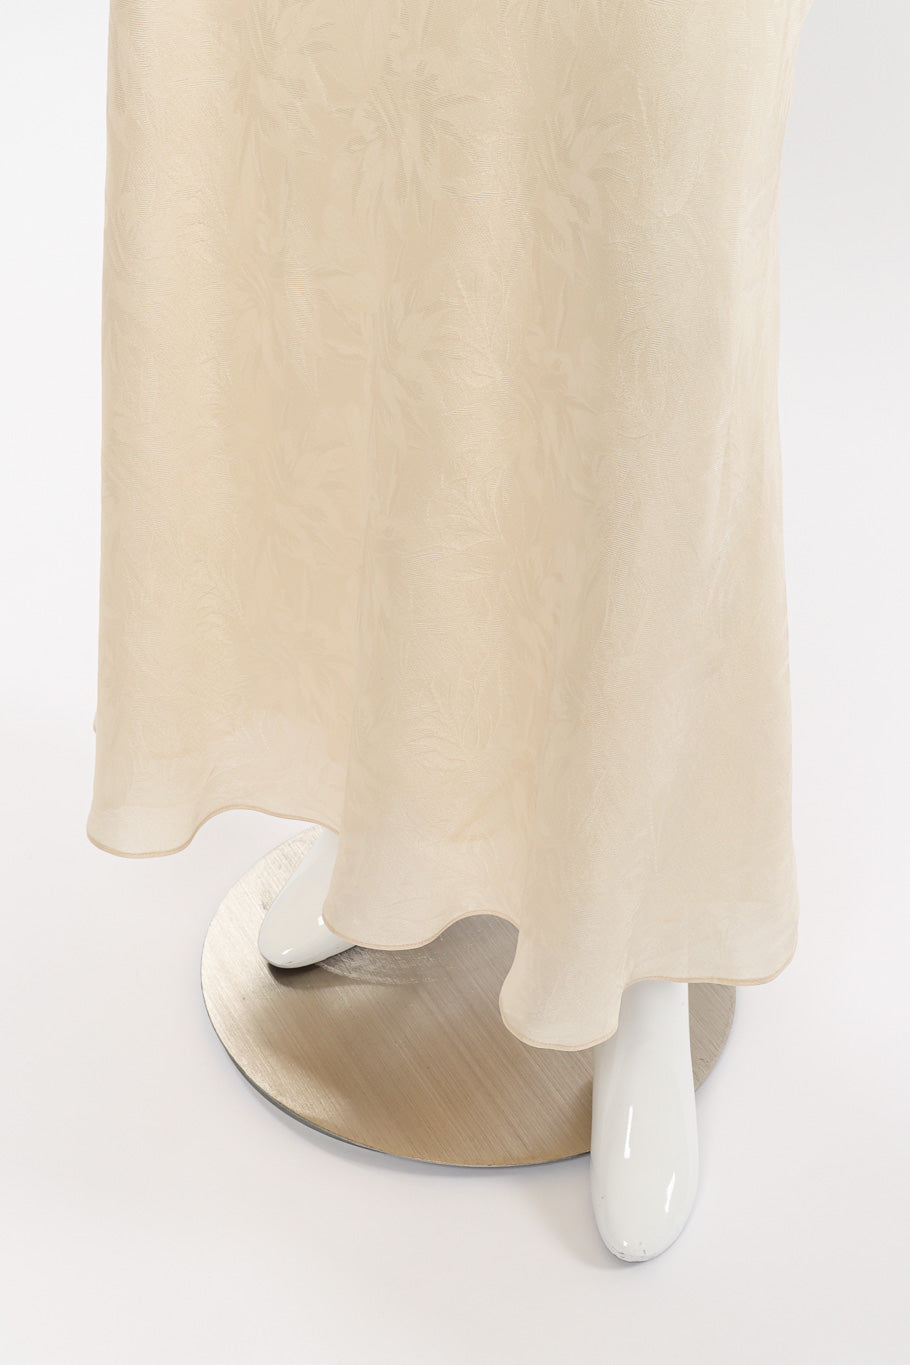 Tank top and skirt set by Calvin Klein on mannequin skirt hem @recessla